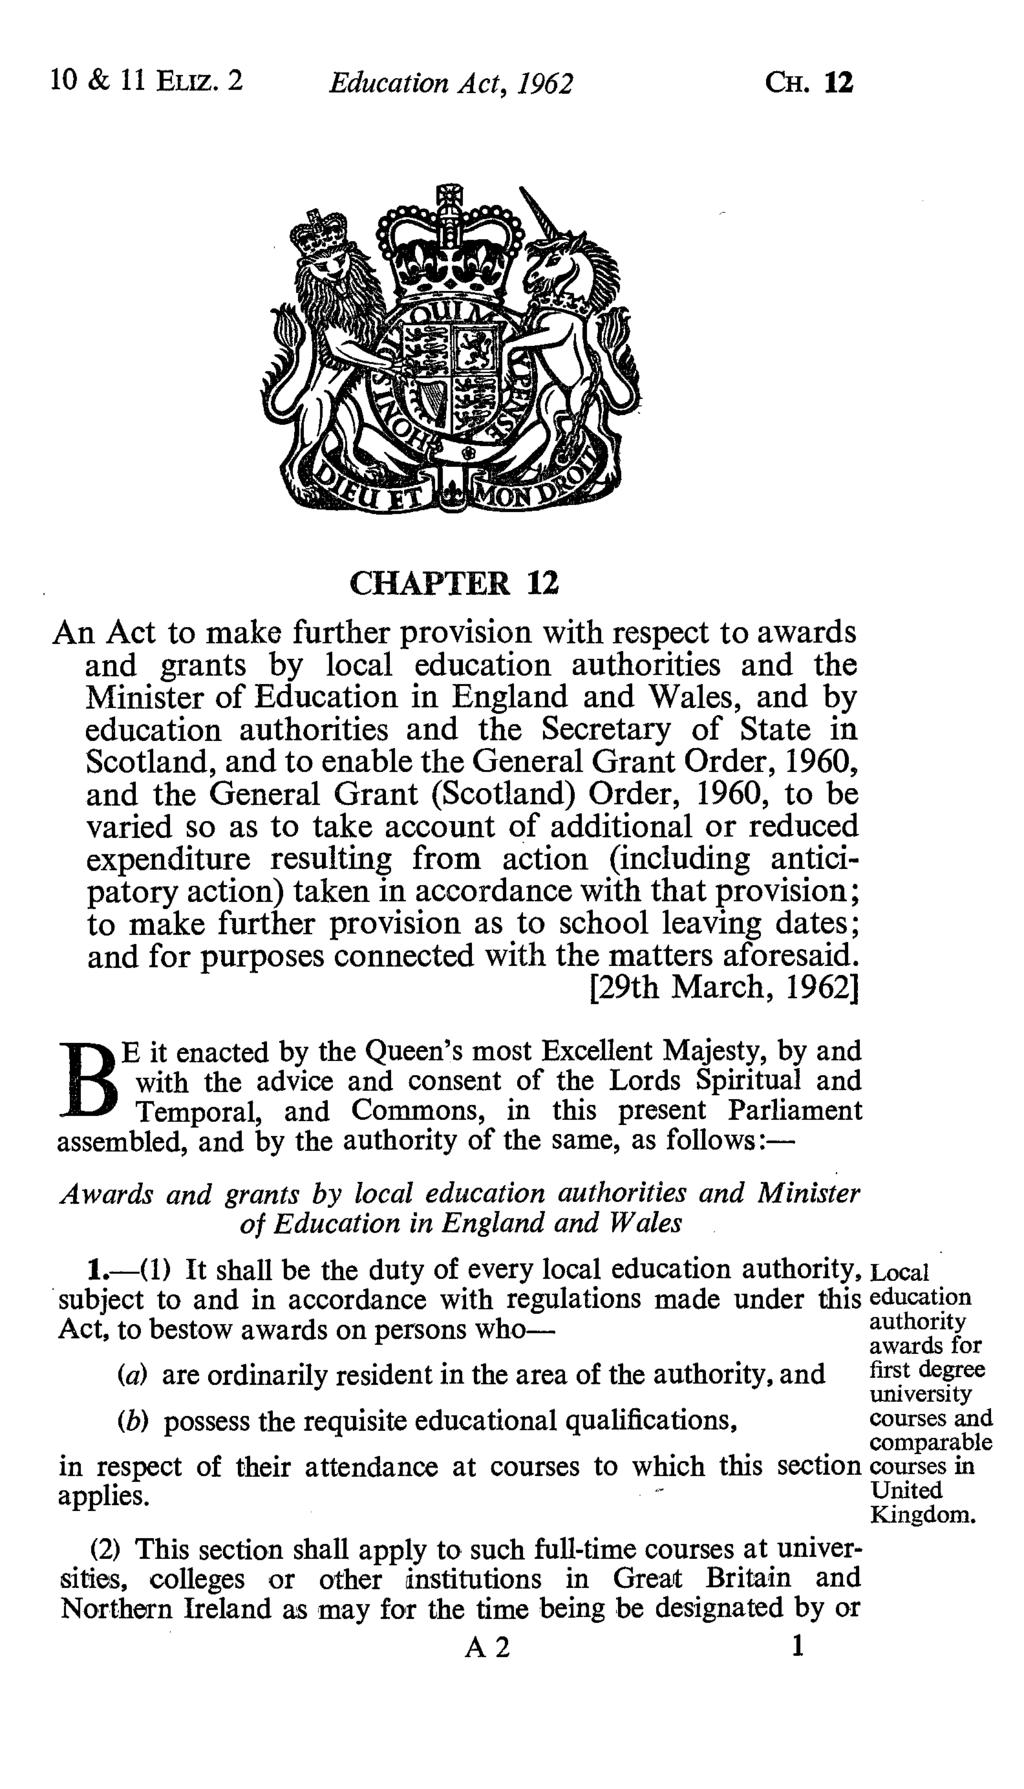 10 & 11 ELiz. 2 Education Act, 1962 CH.